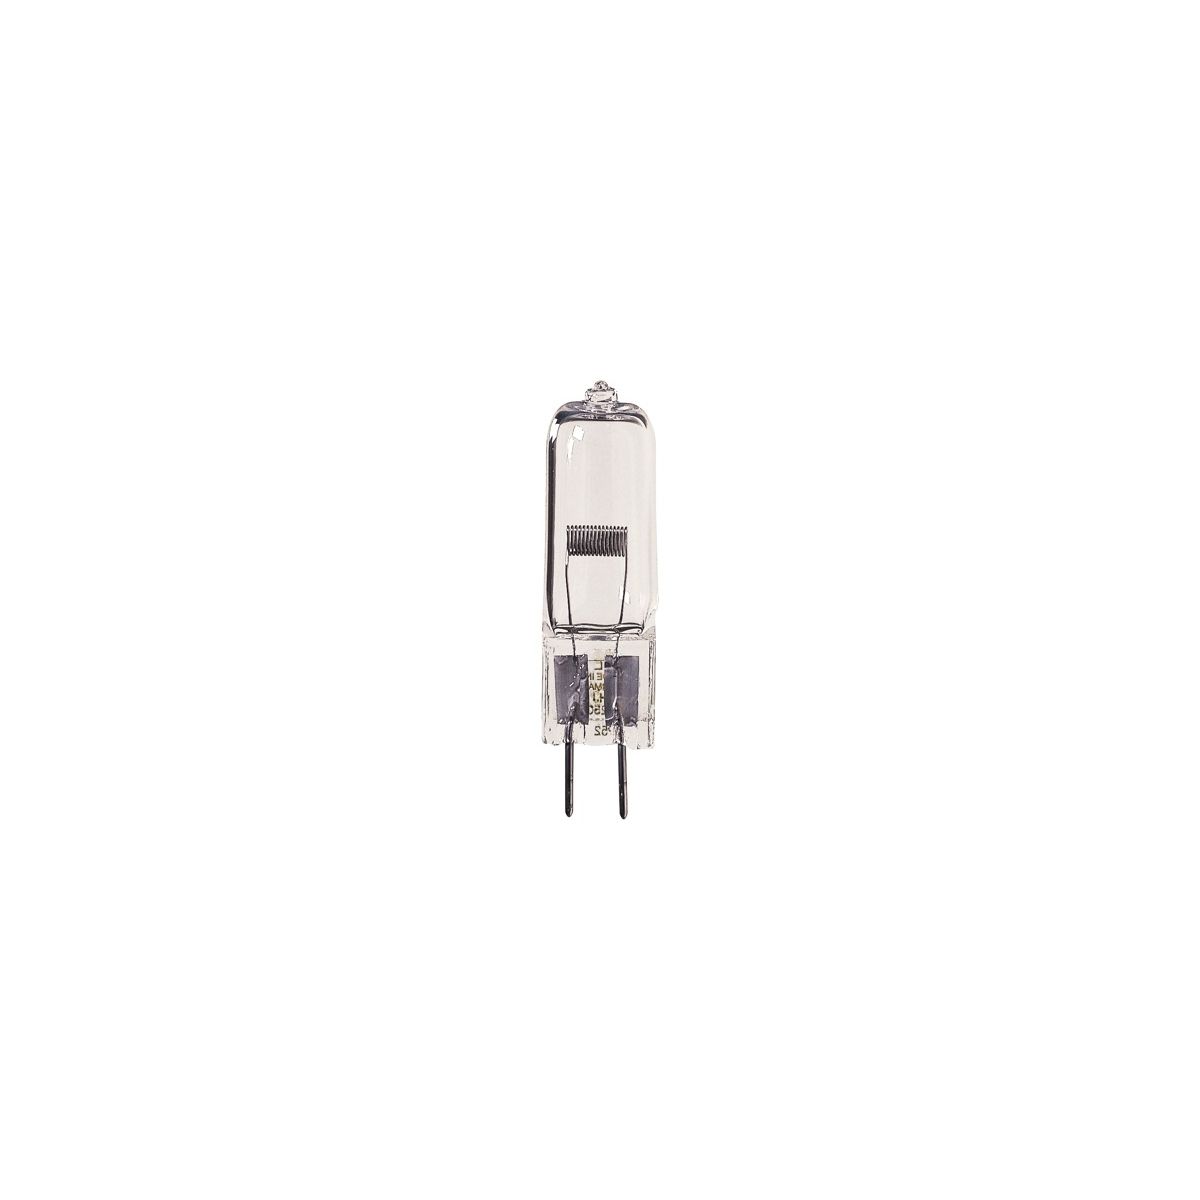 Ampoules halogènes - Osram / GE / Philips - 240V 150W